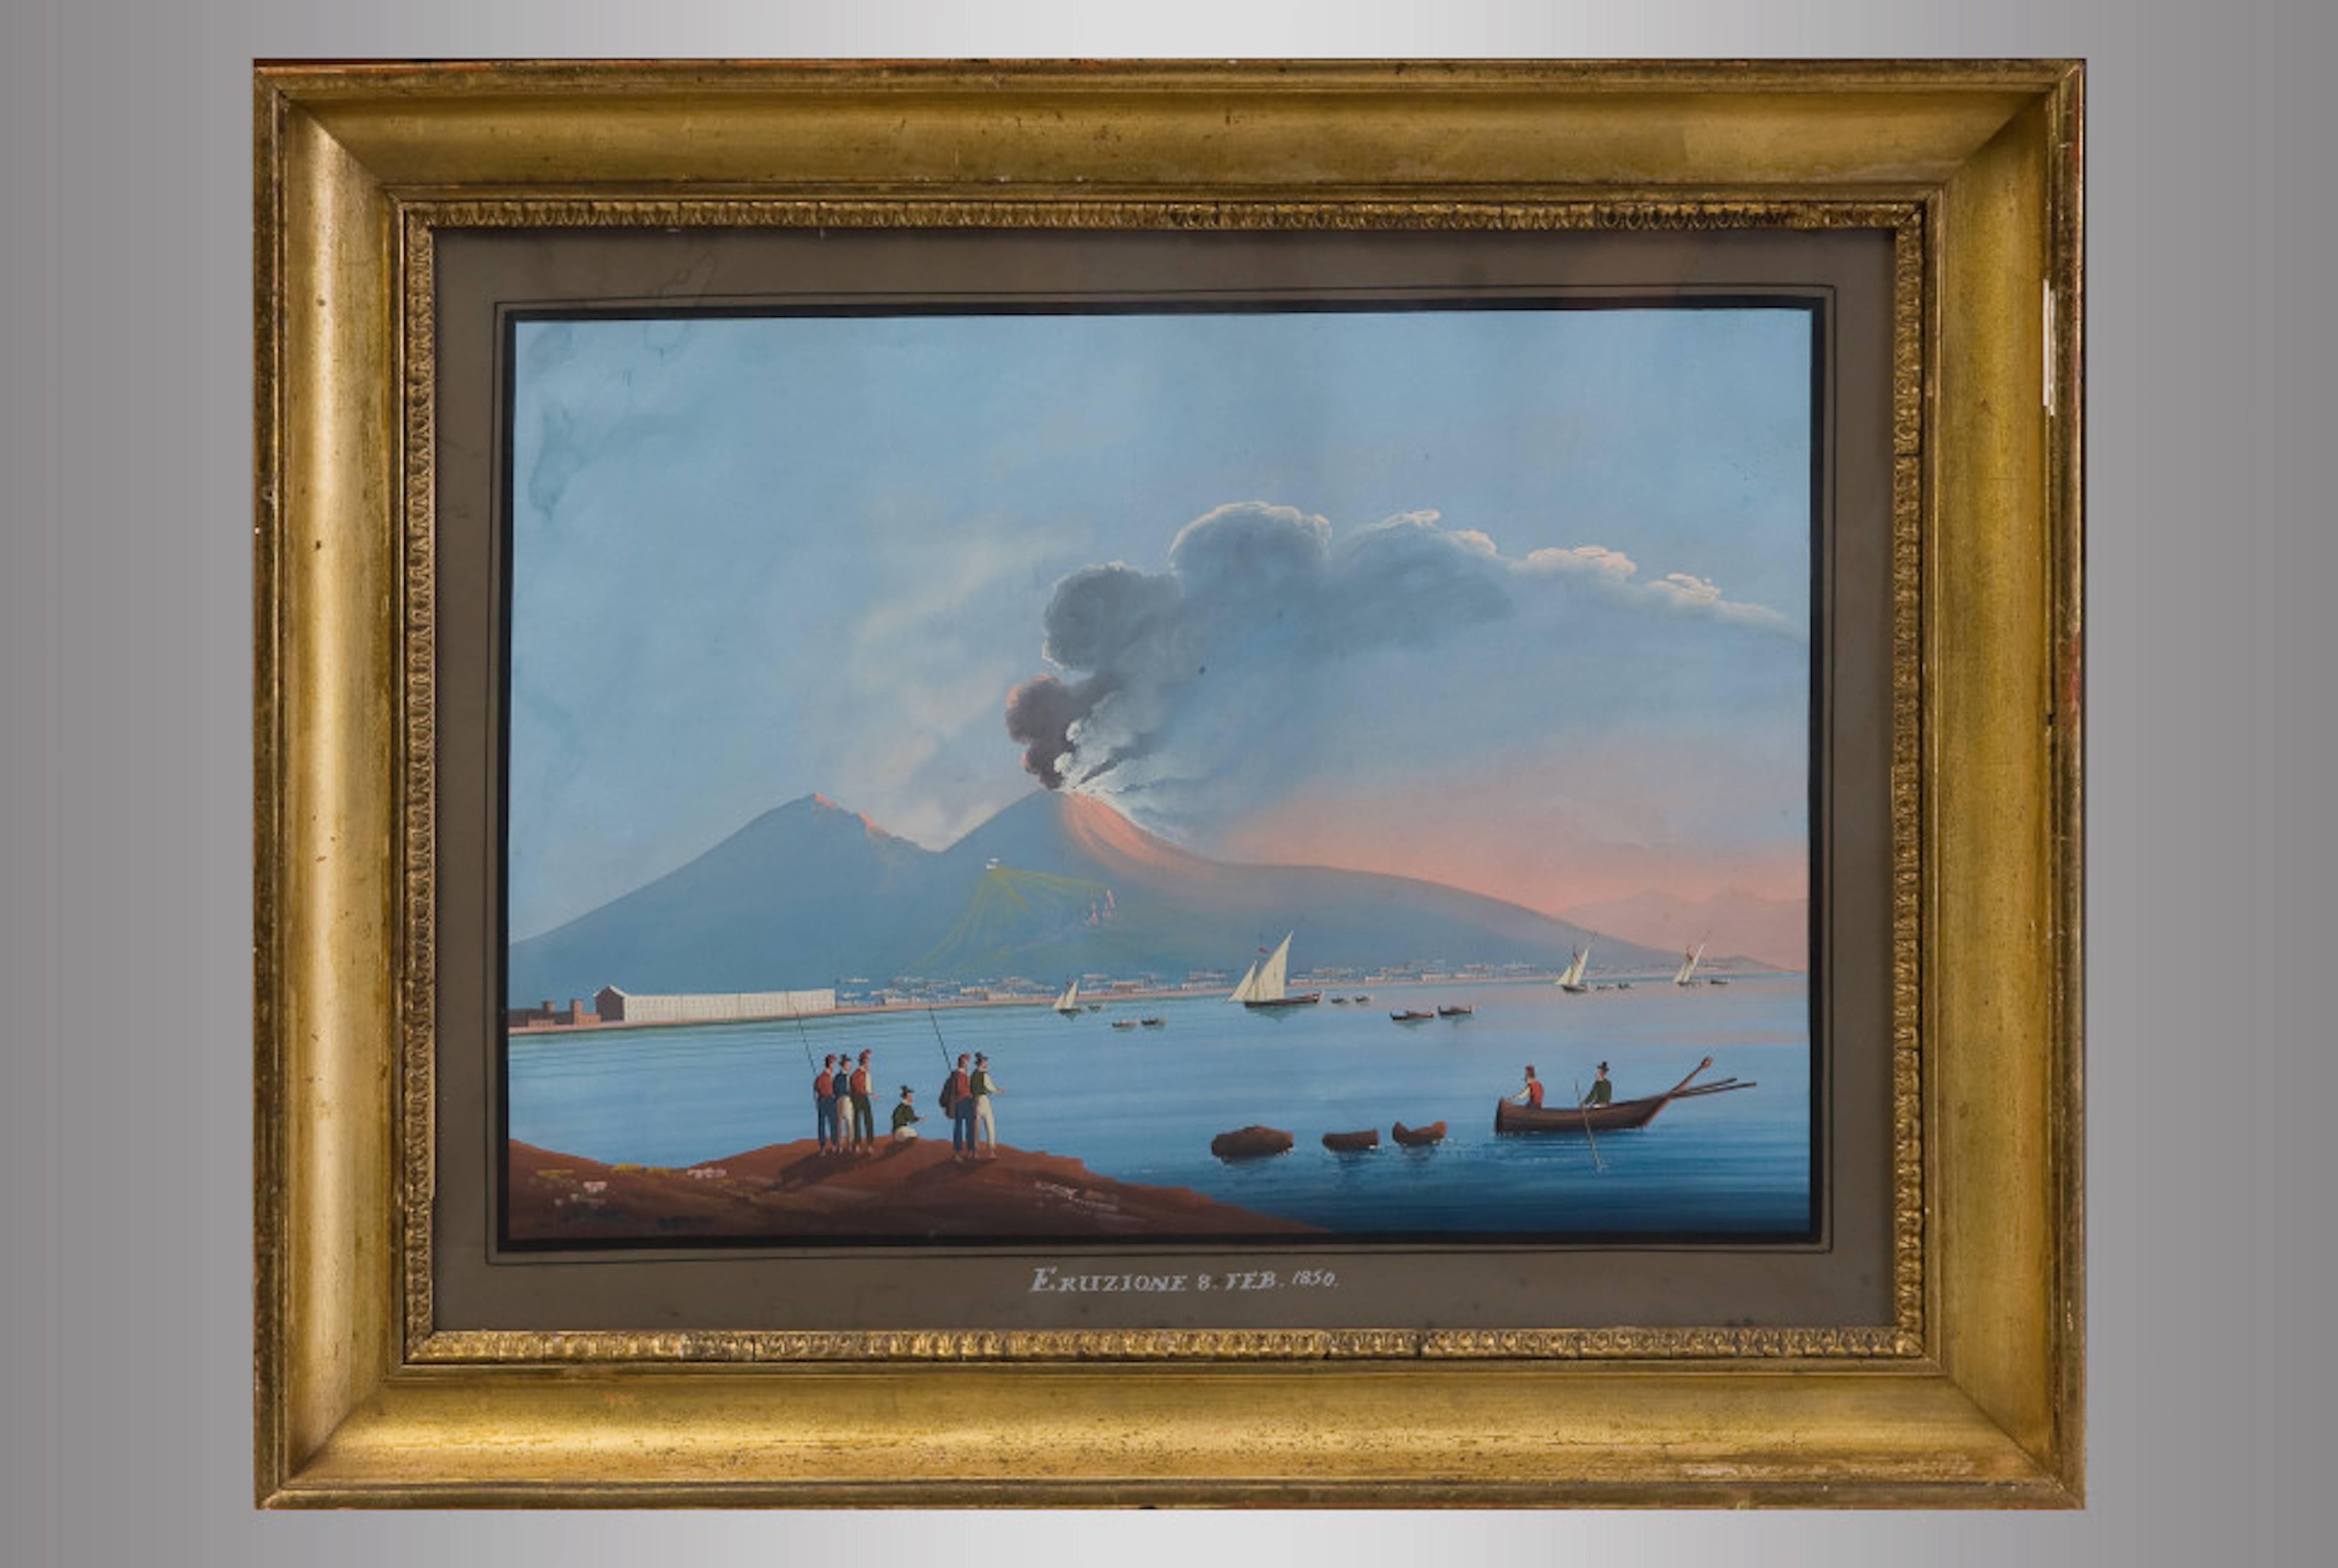 Pair of Neapolitan Gouache ''Eruzione 8 de Febrero de 1850''
19th century
Wiews of Vesuvius eruption, day and night.
Original framed.

 